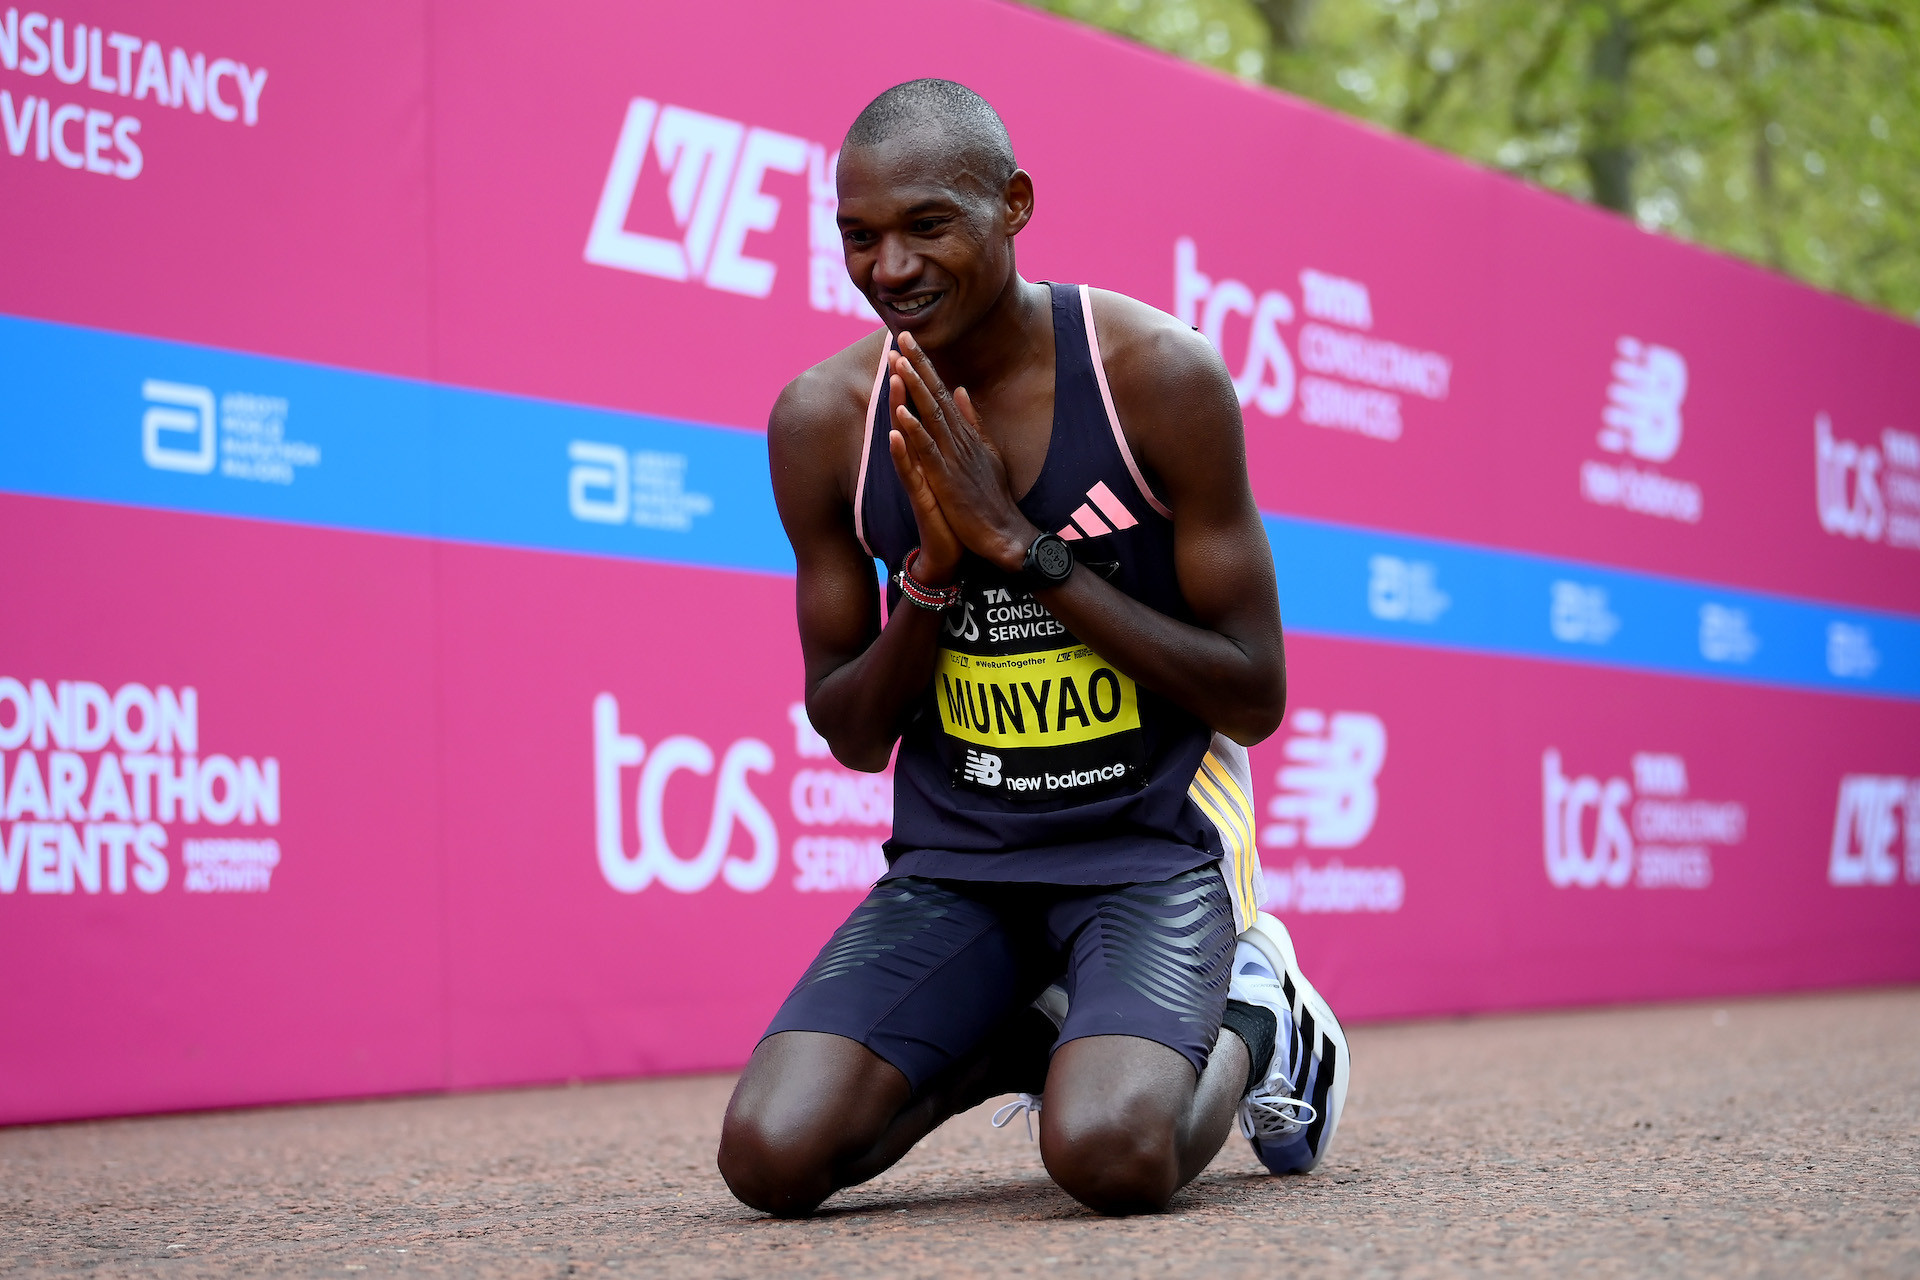 London Marathon Winner Munyao to Represent Kenya in Paris 2024 Olympics